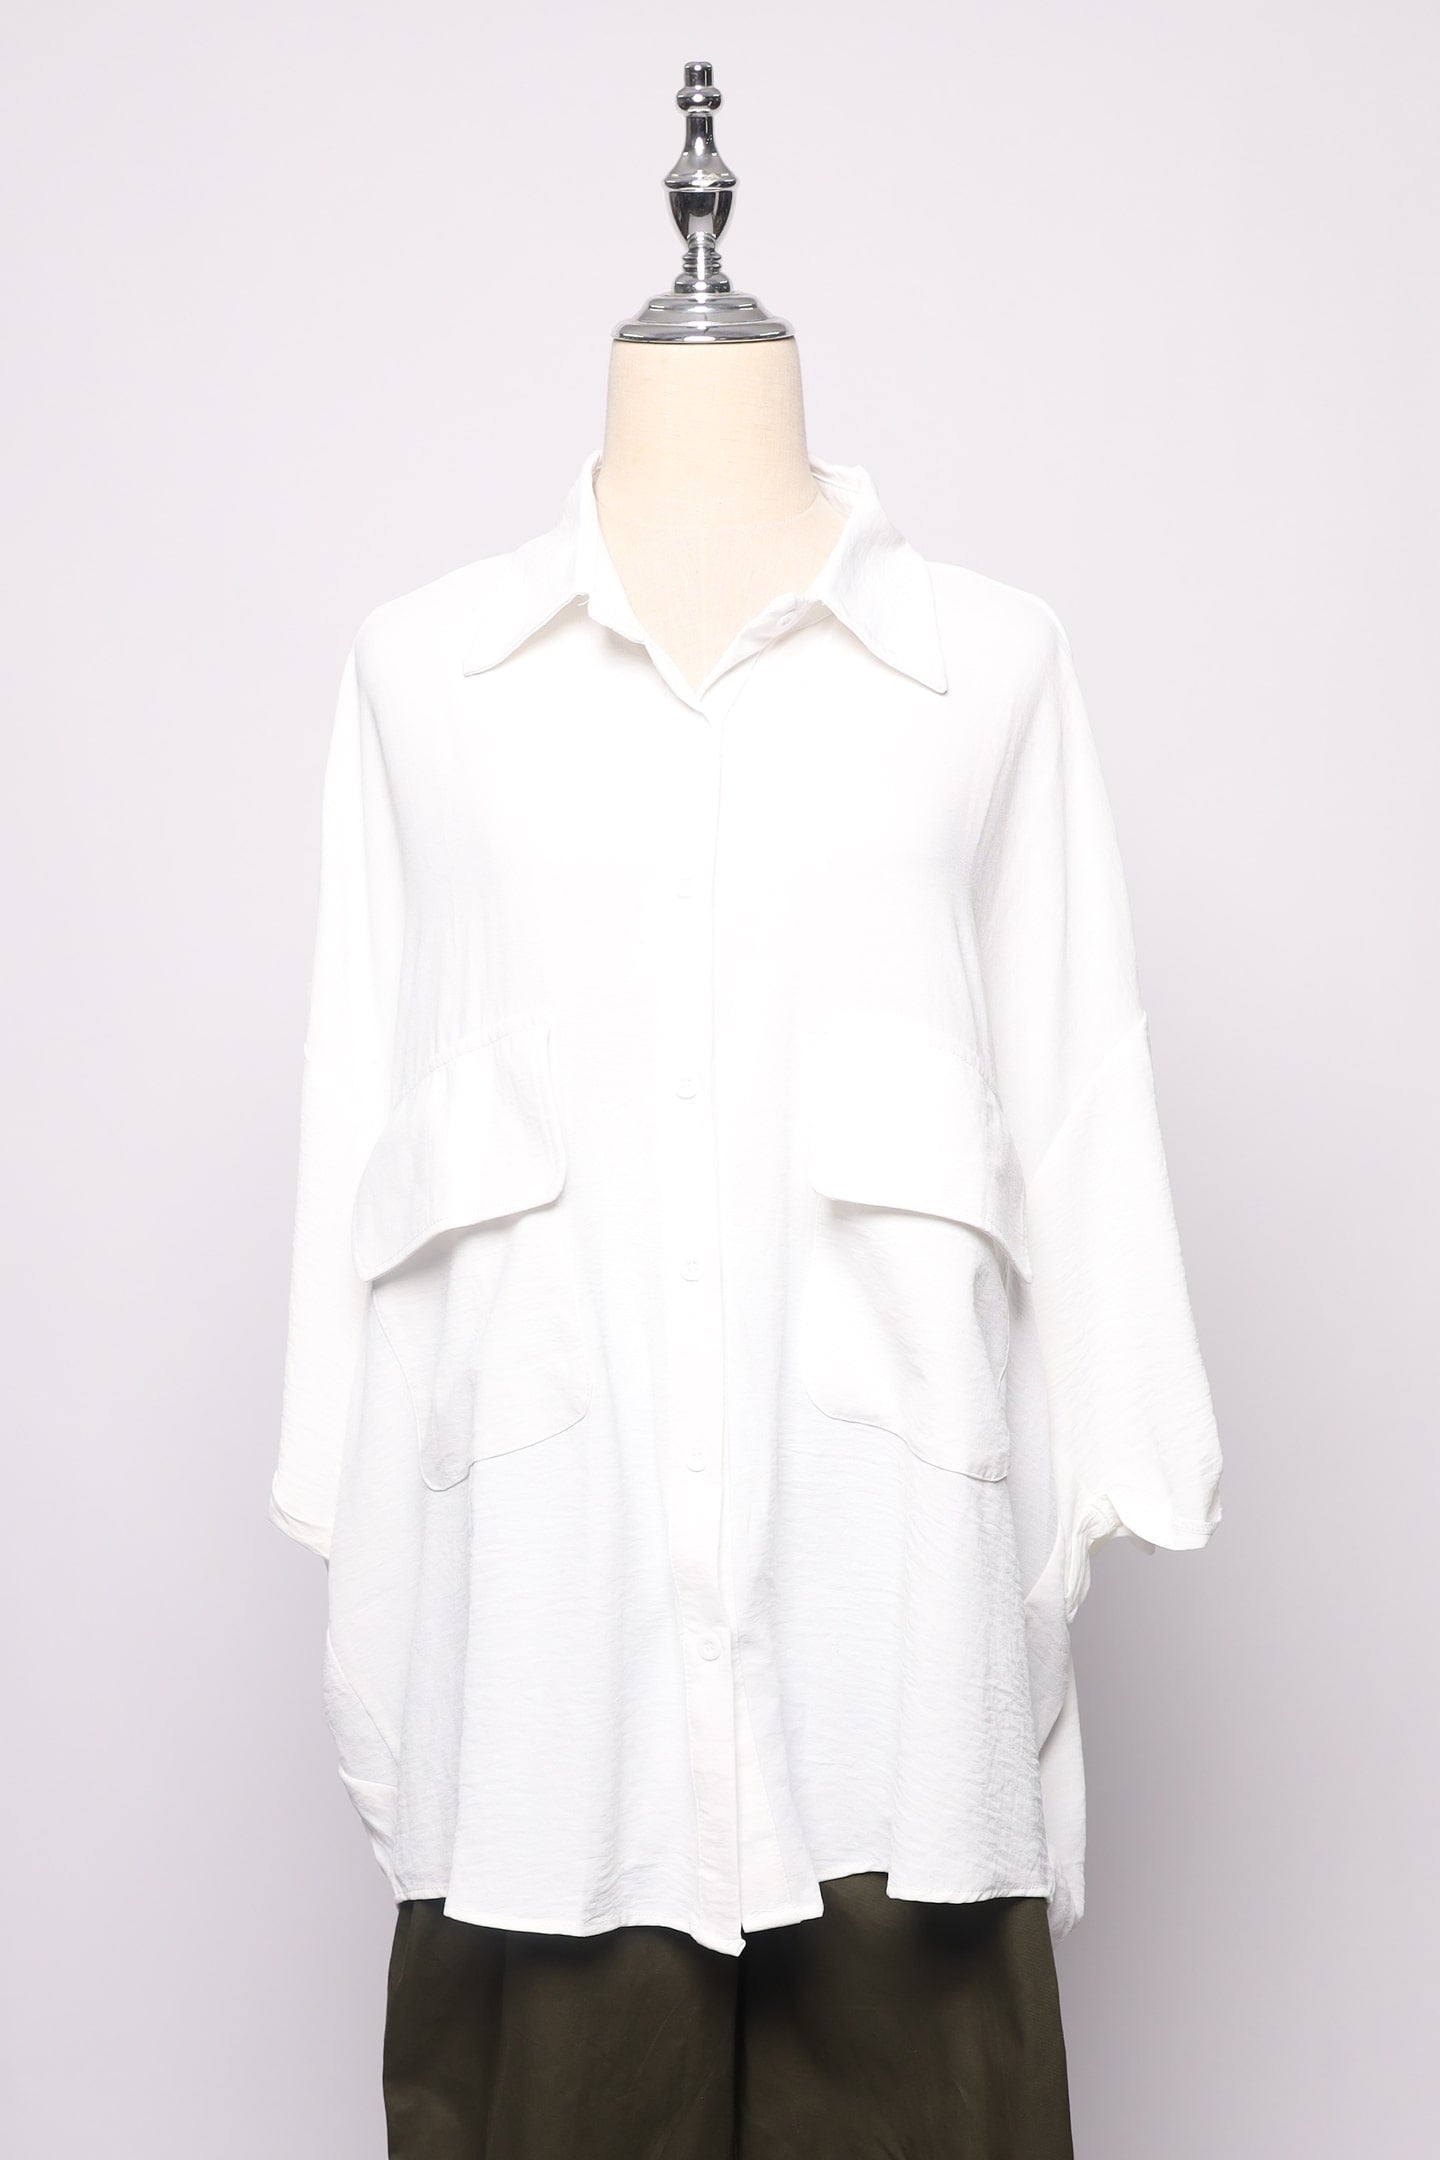 PO - Charlie Shirt in White